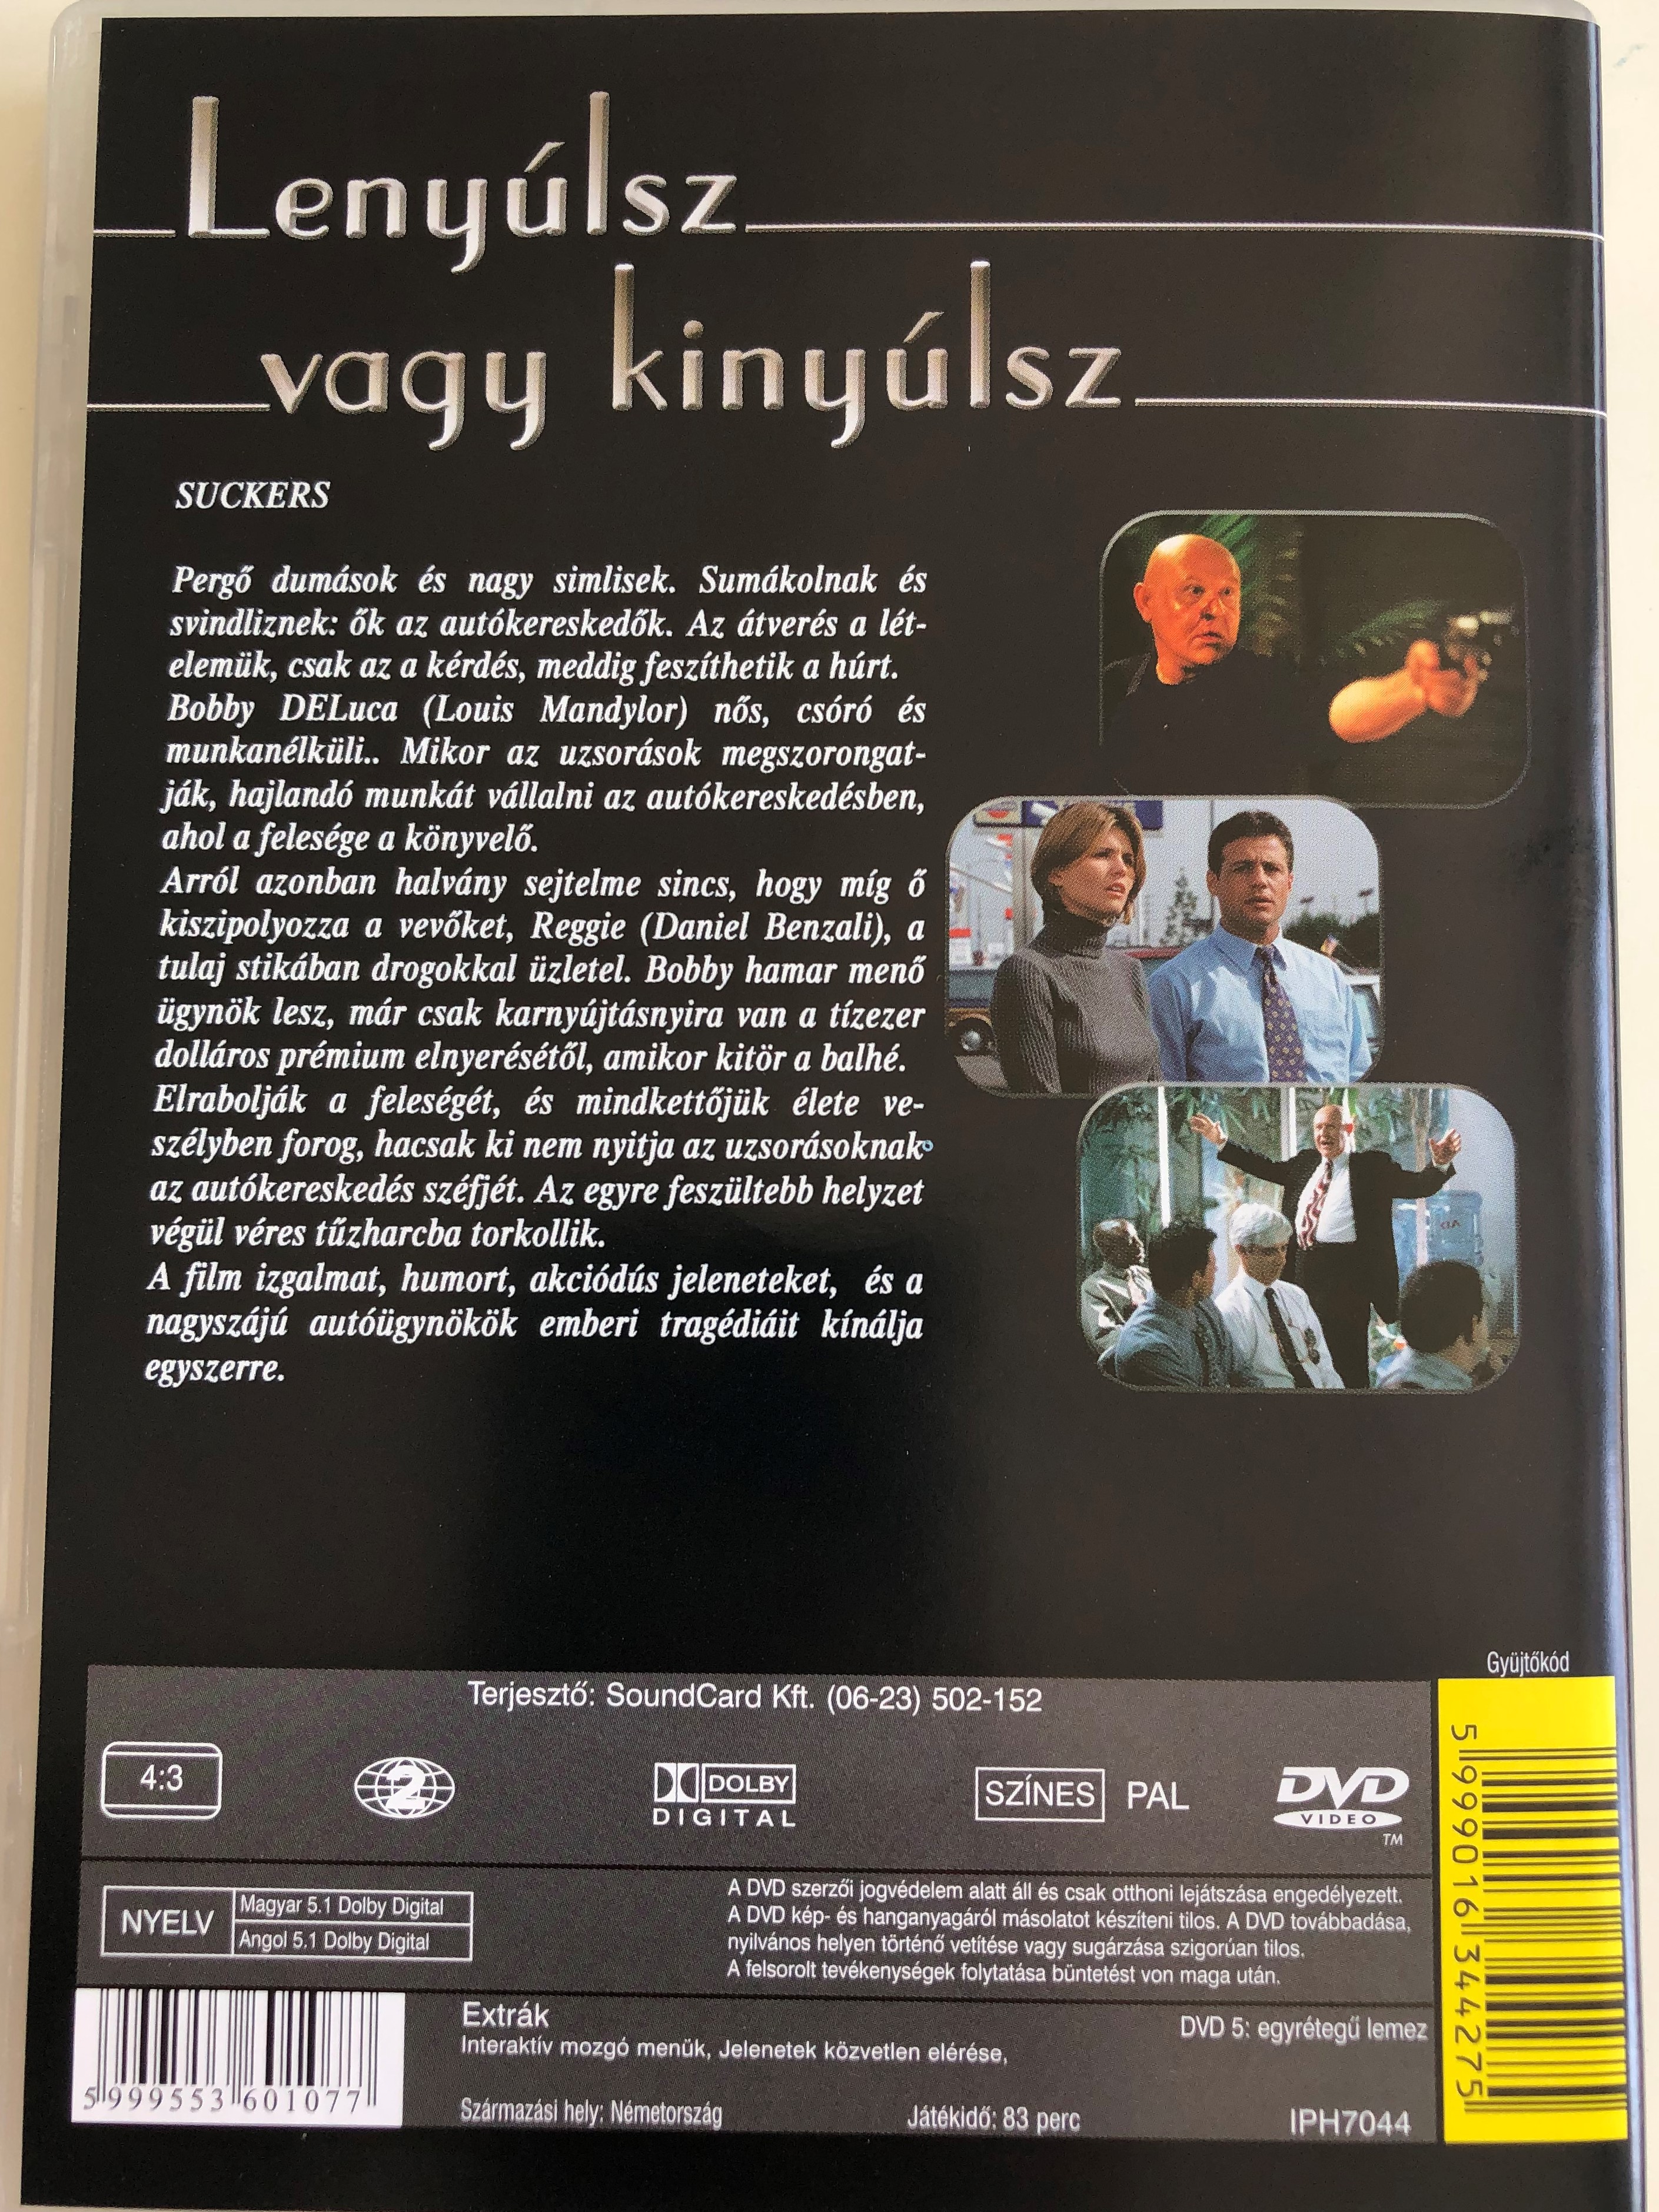 suckers-dvd-2001-leny-lsz-vagy-kiny-lsz-directed-by-roger-nygard-starring-joe-yanetty-jake-johannsen-daniel-benzali-david-ackert-utah-blue-eli-danker-2-.jpg